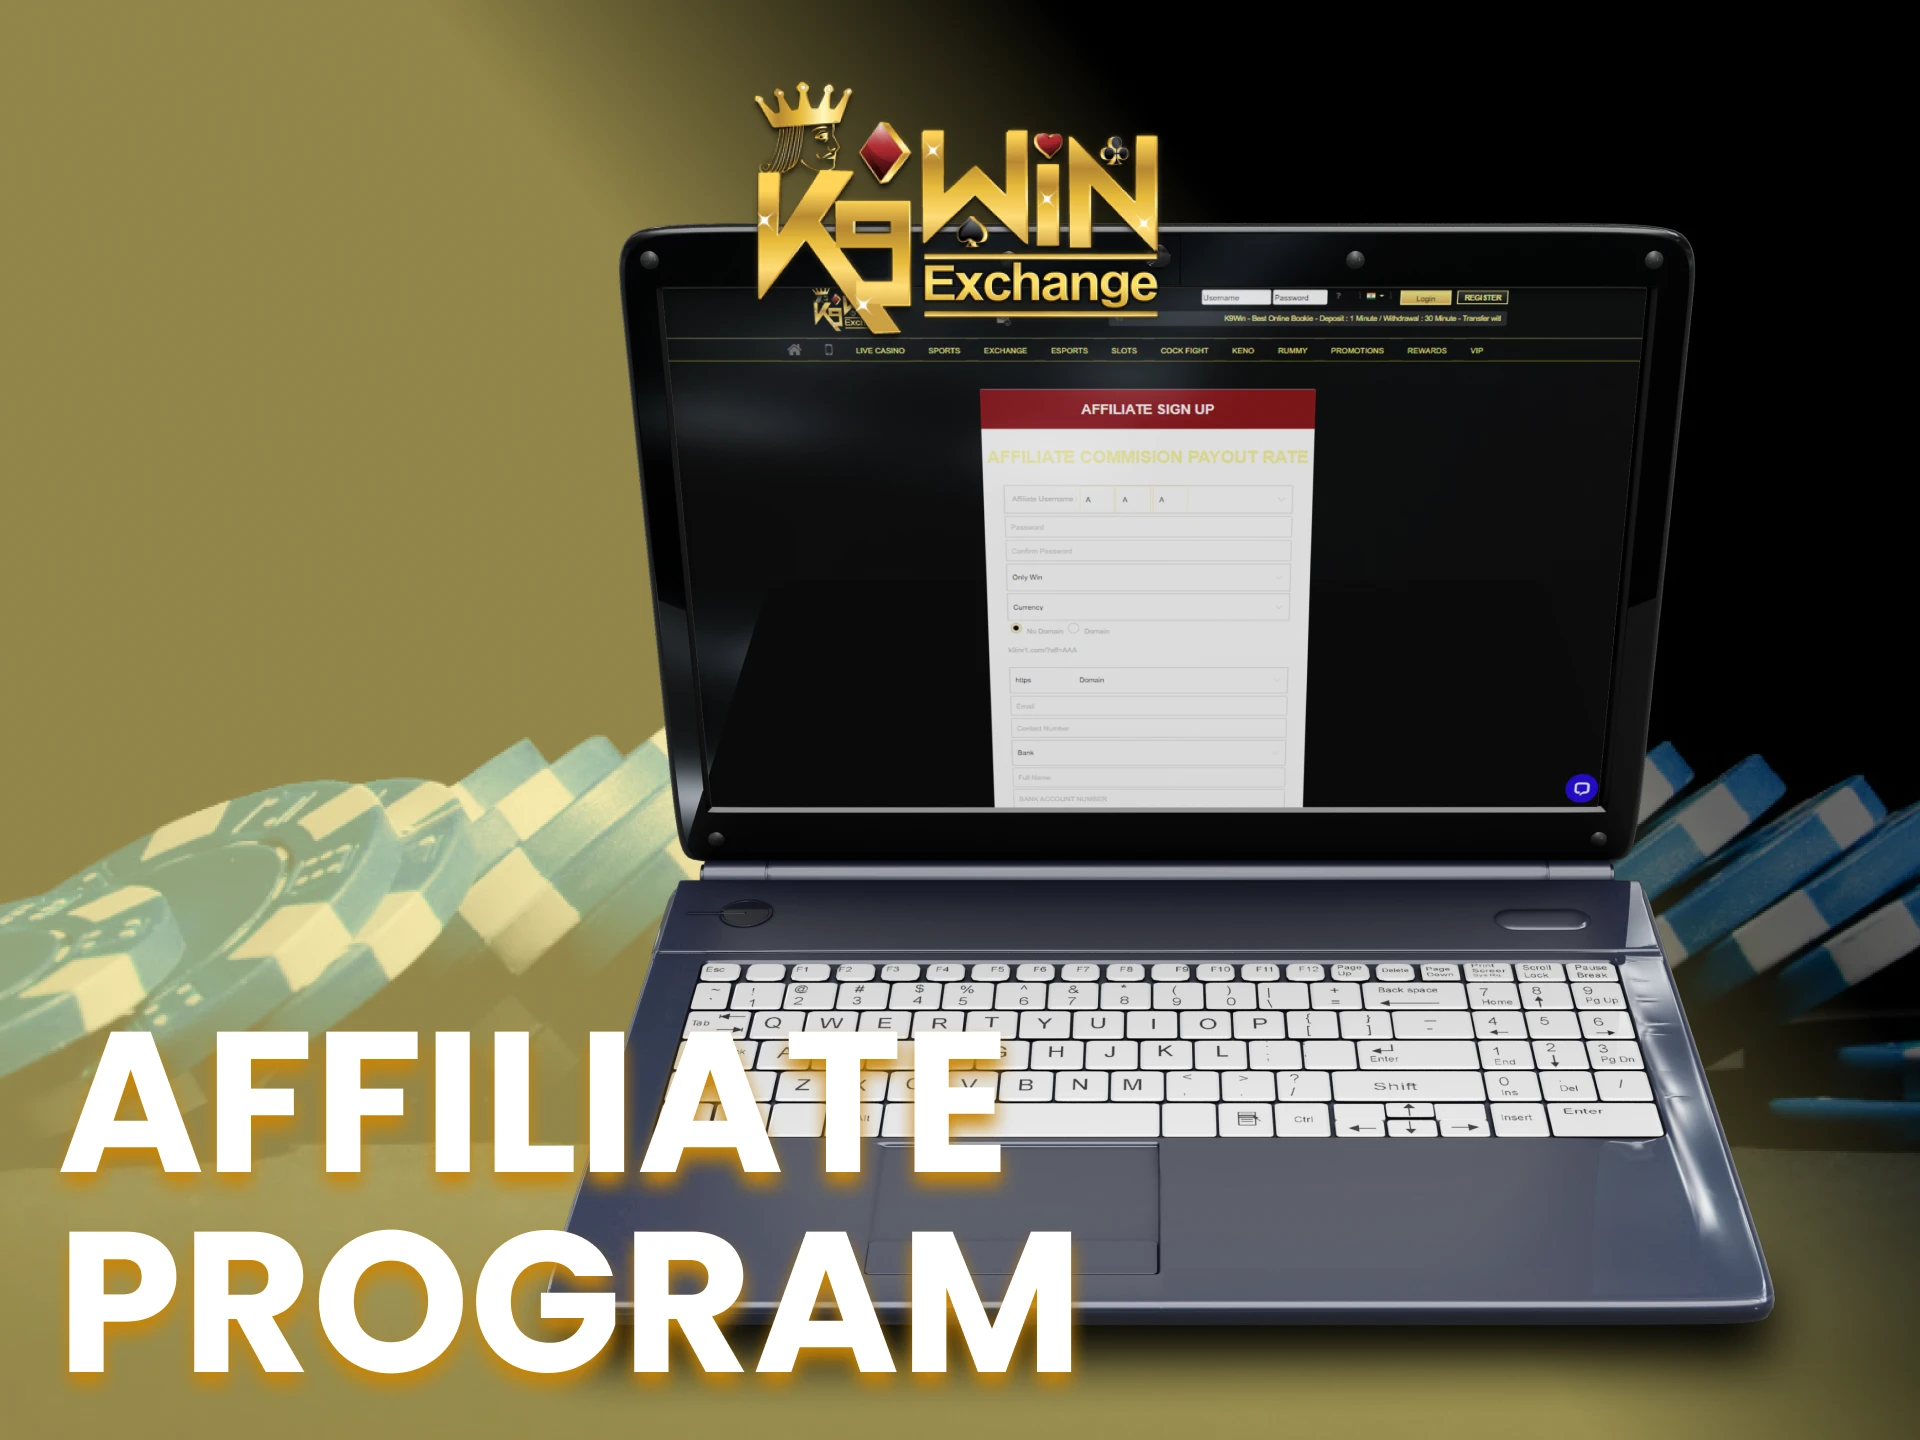 Invite your friends using the K9Win affiliate program.